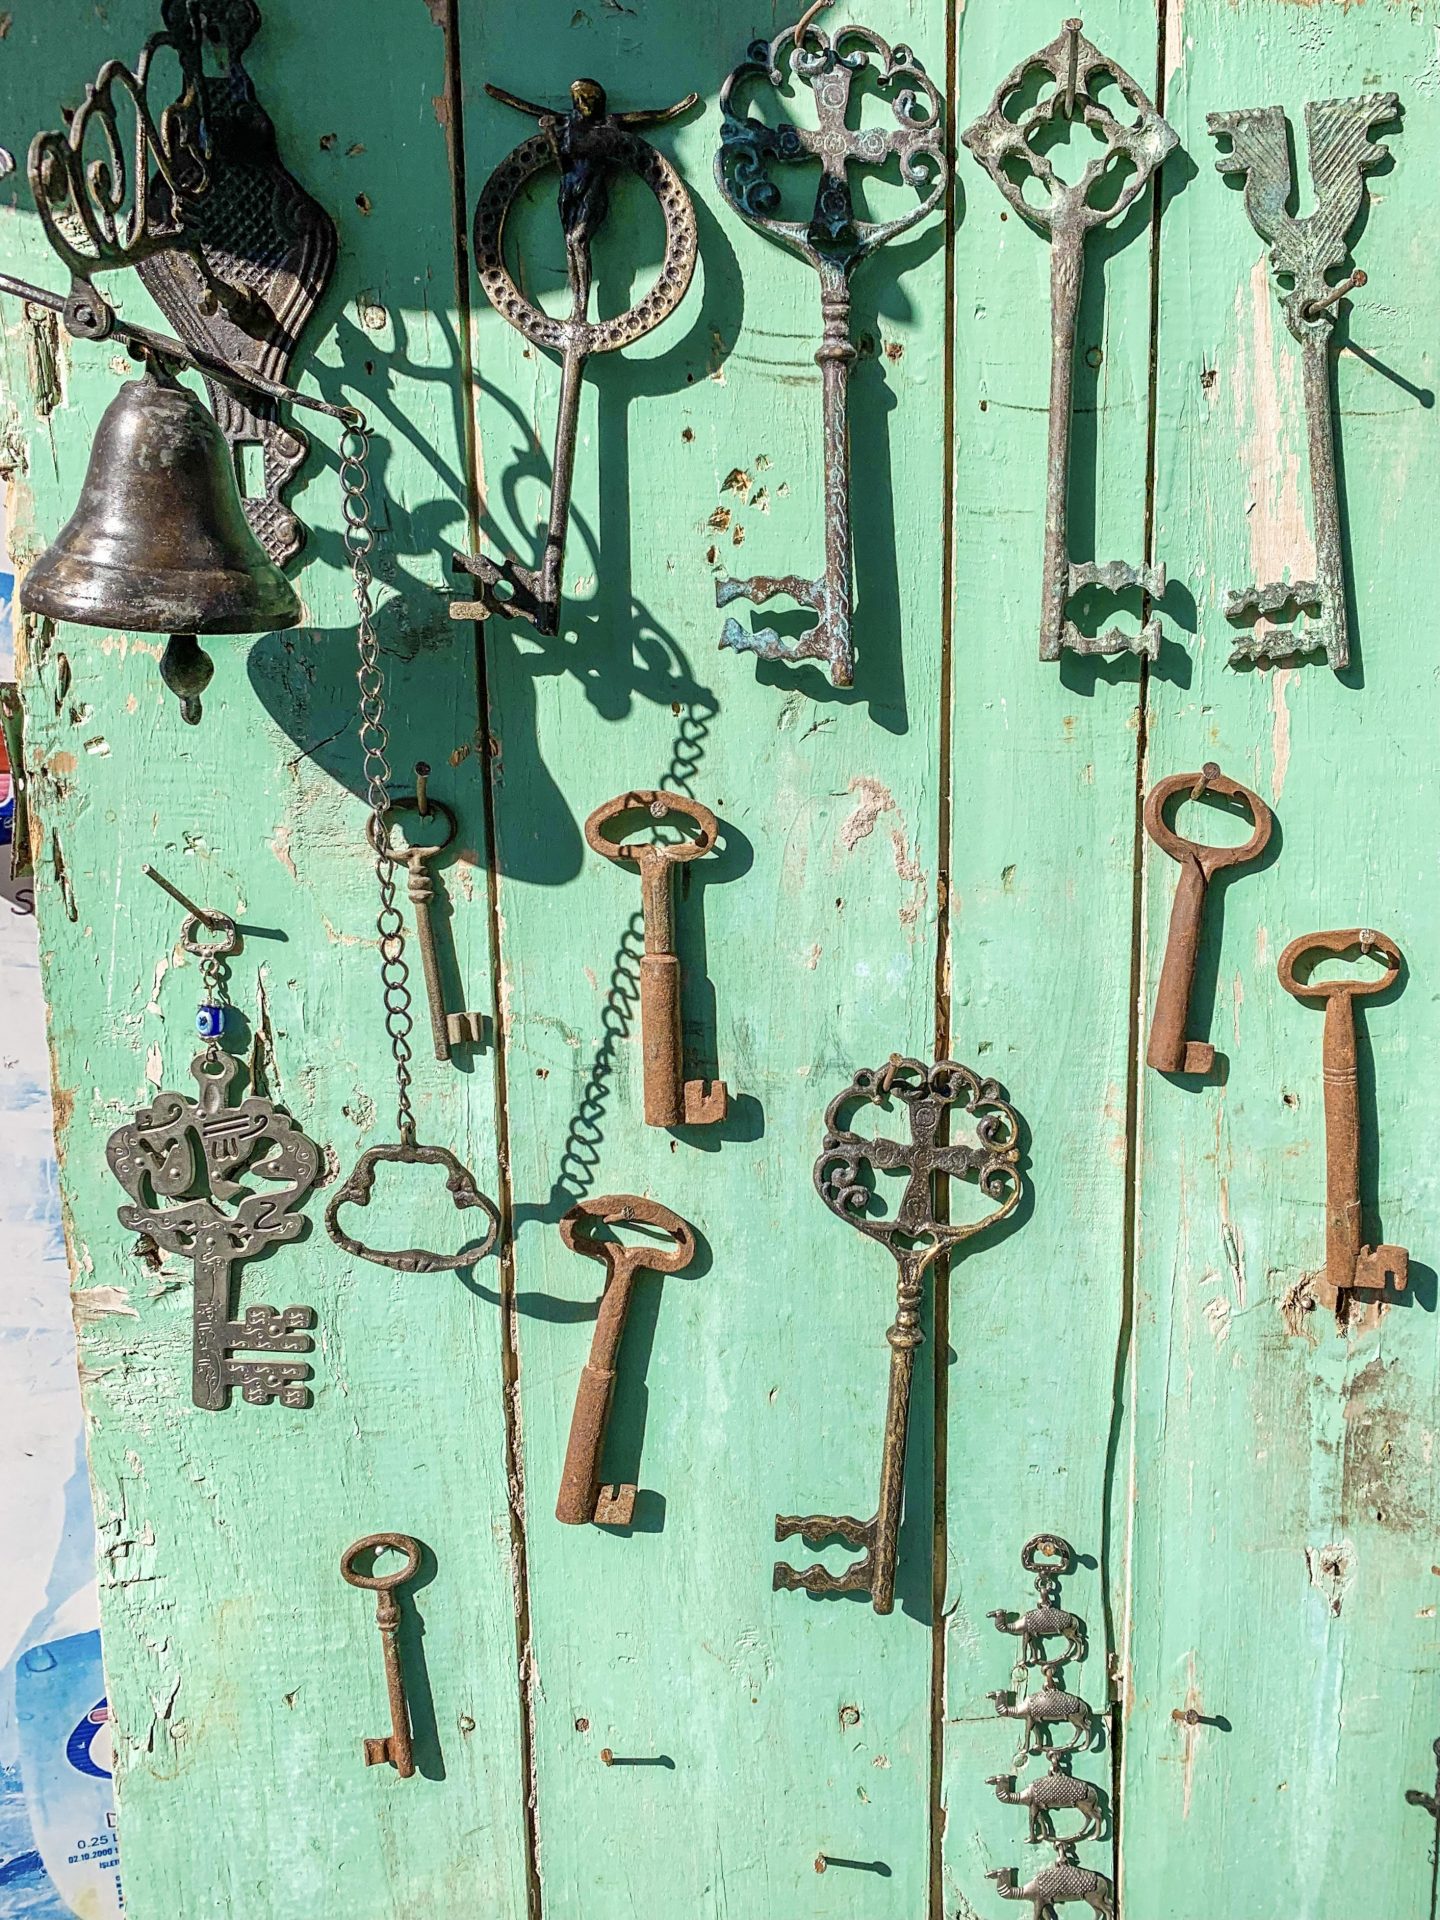 chaves antigas da turquia